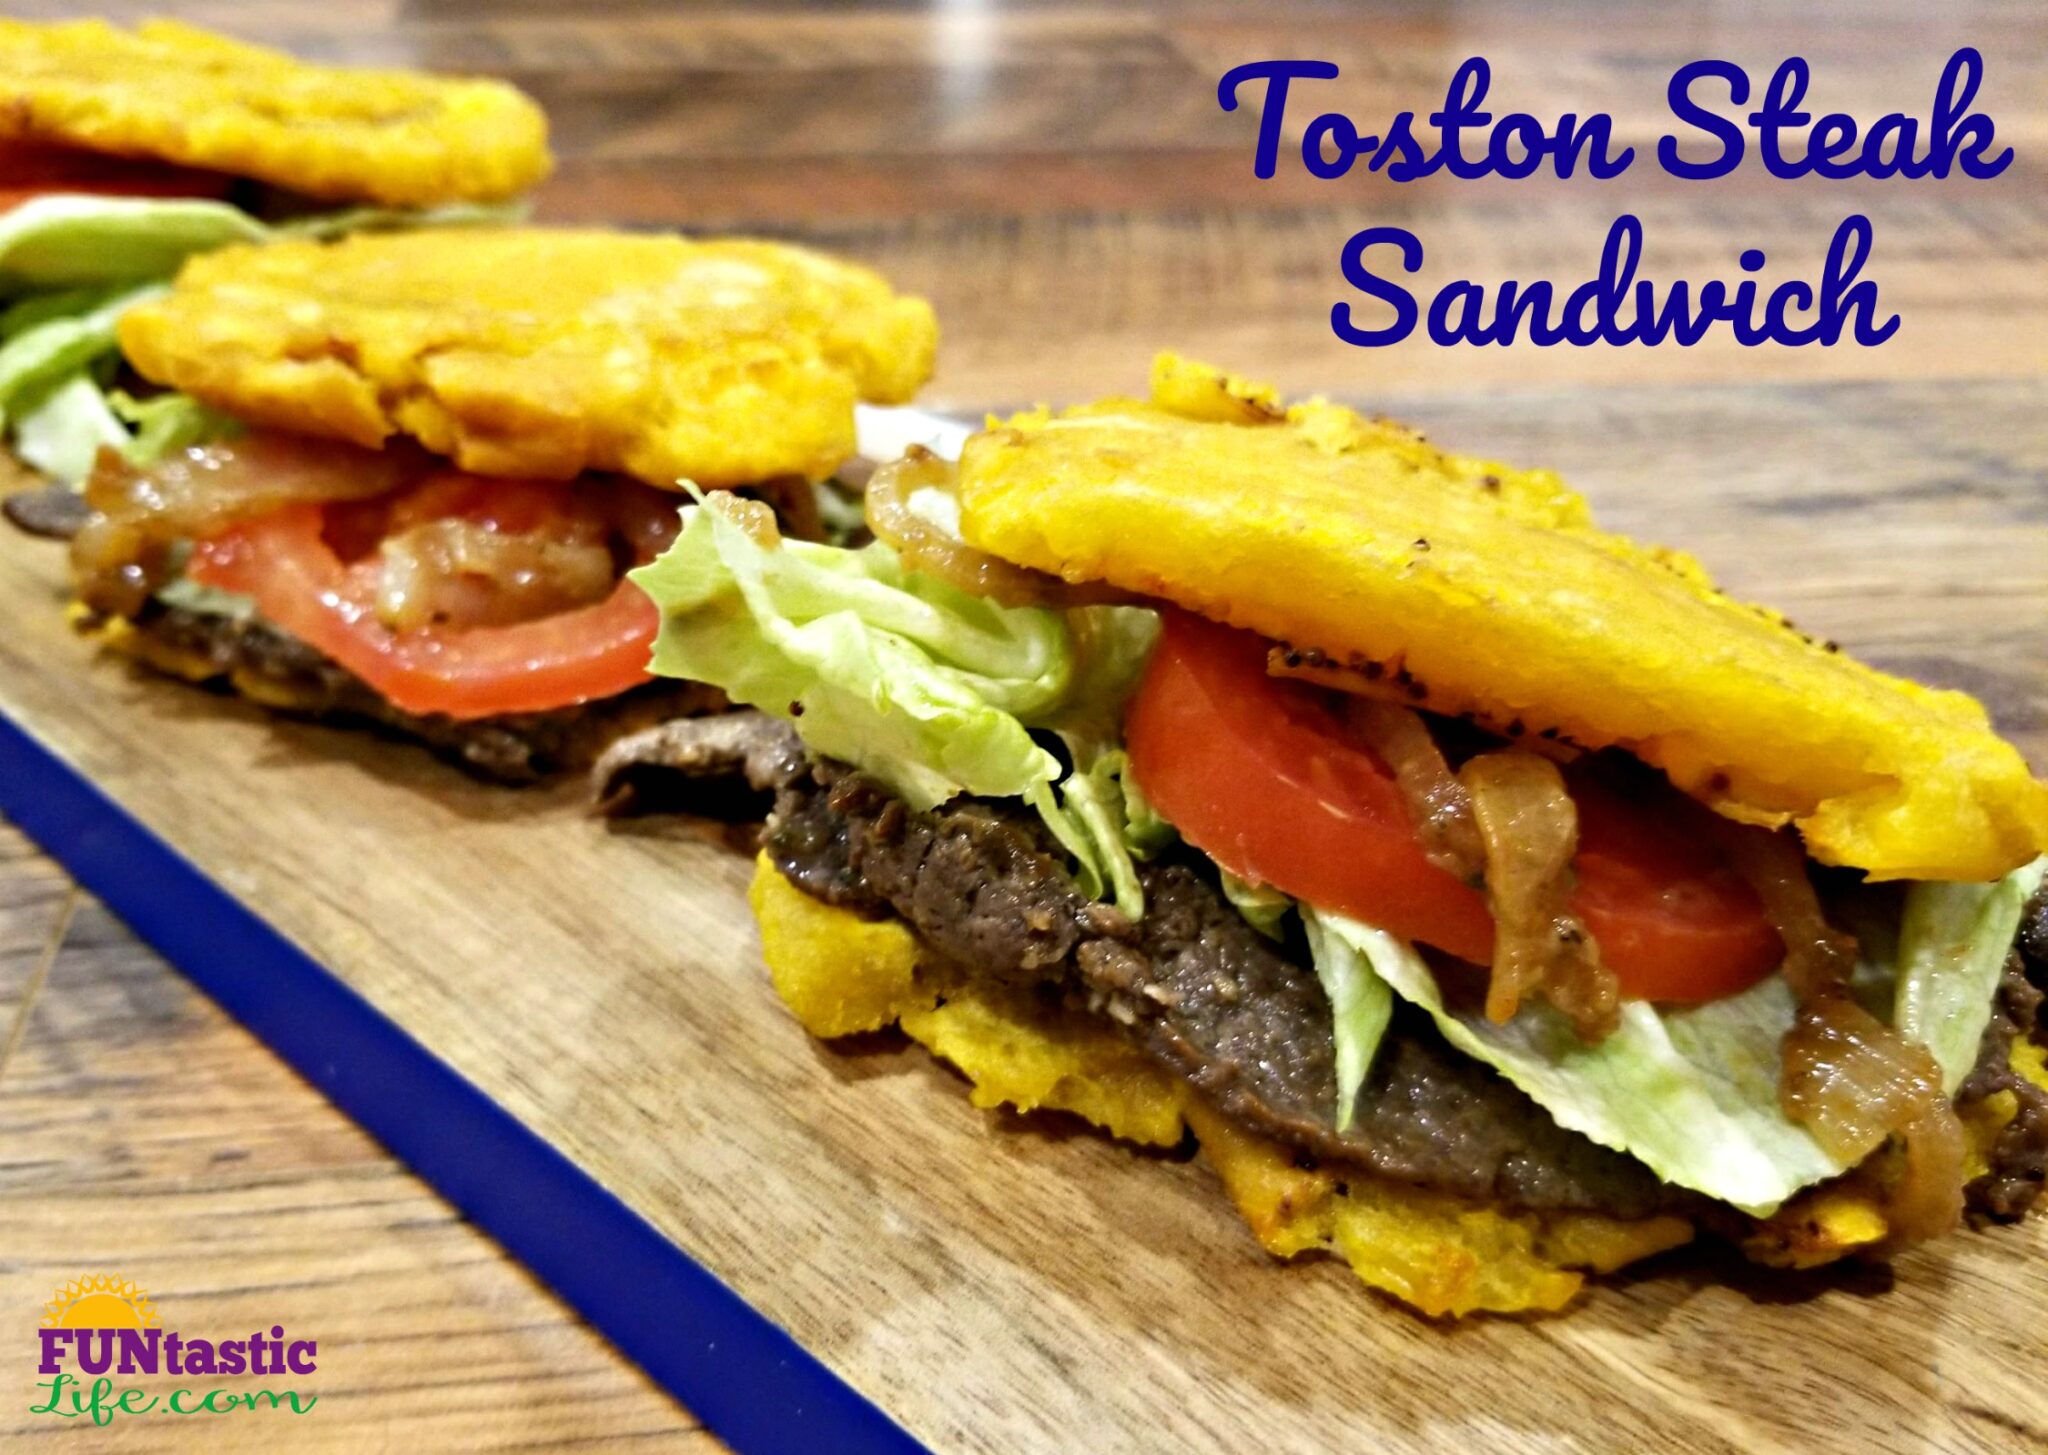 The Toston Steak Sandwich.